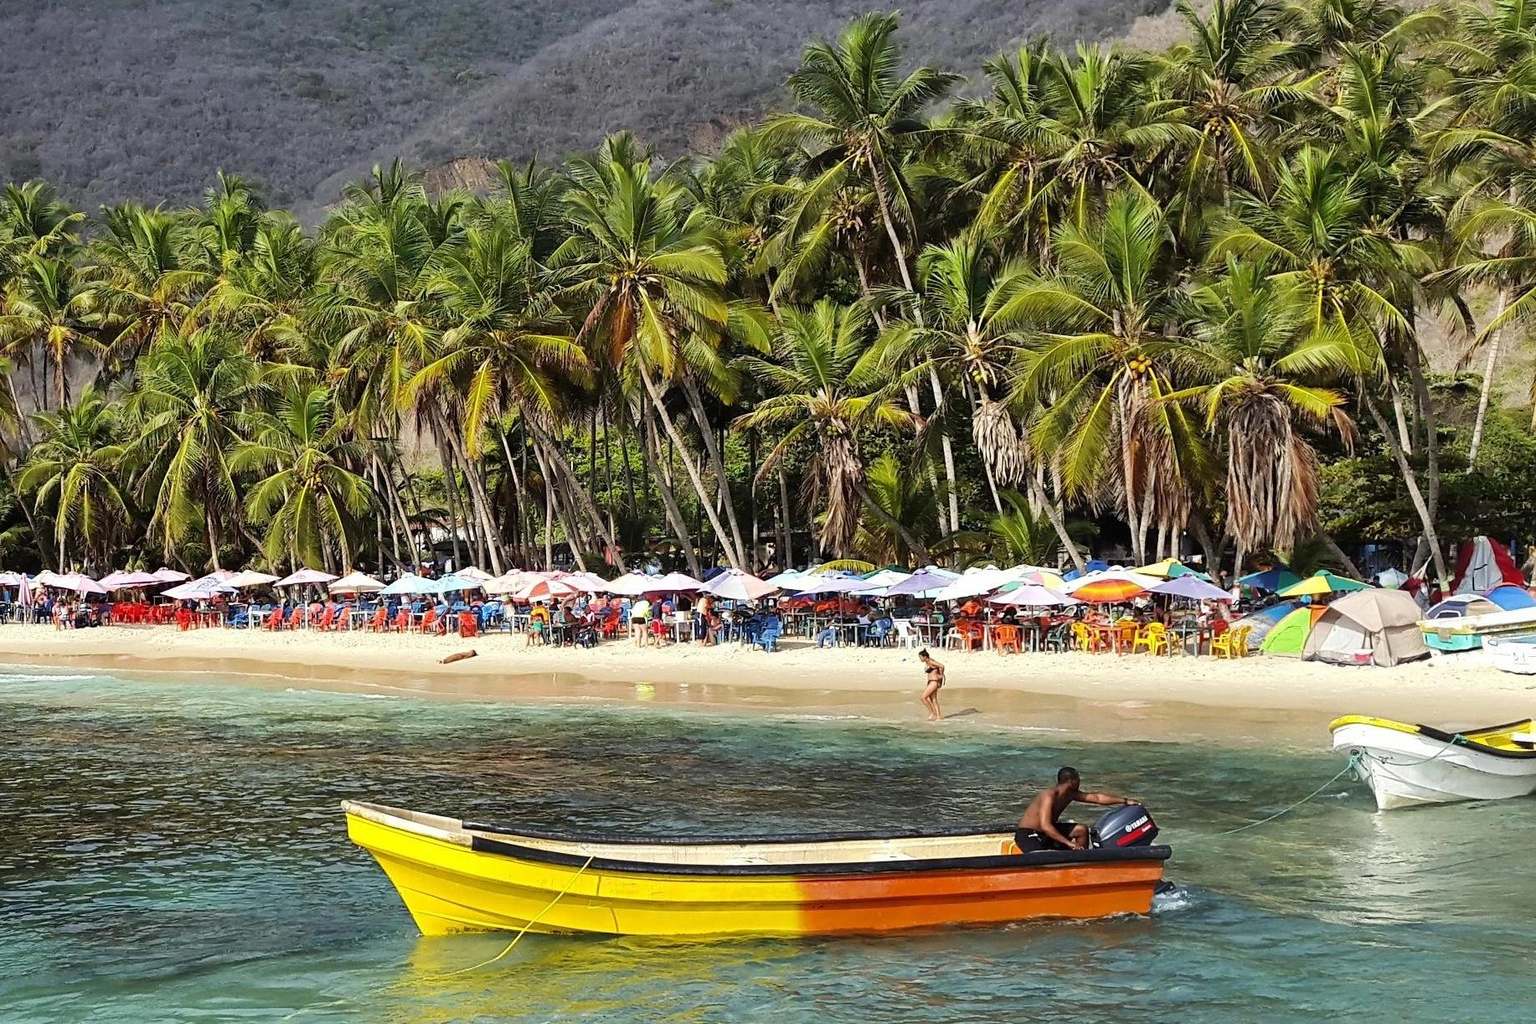  Bahía de Cata  strand - Venezuela